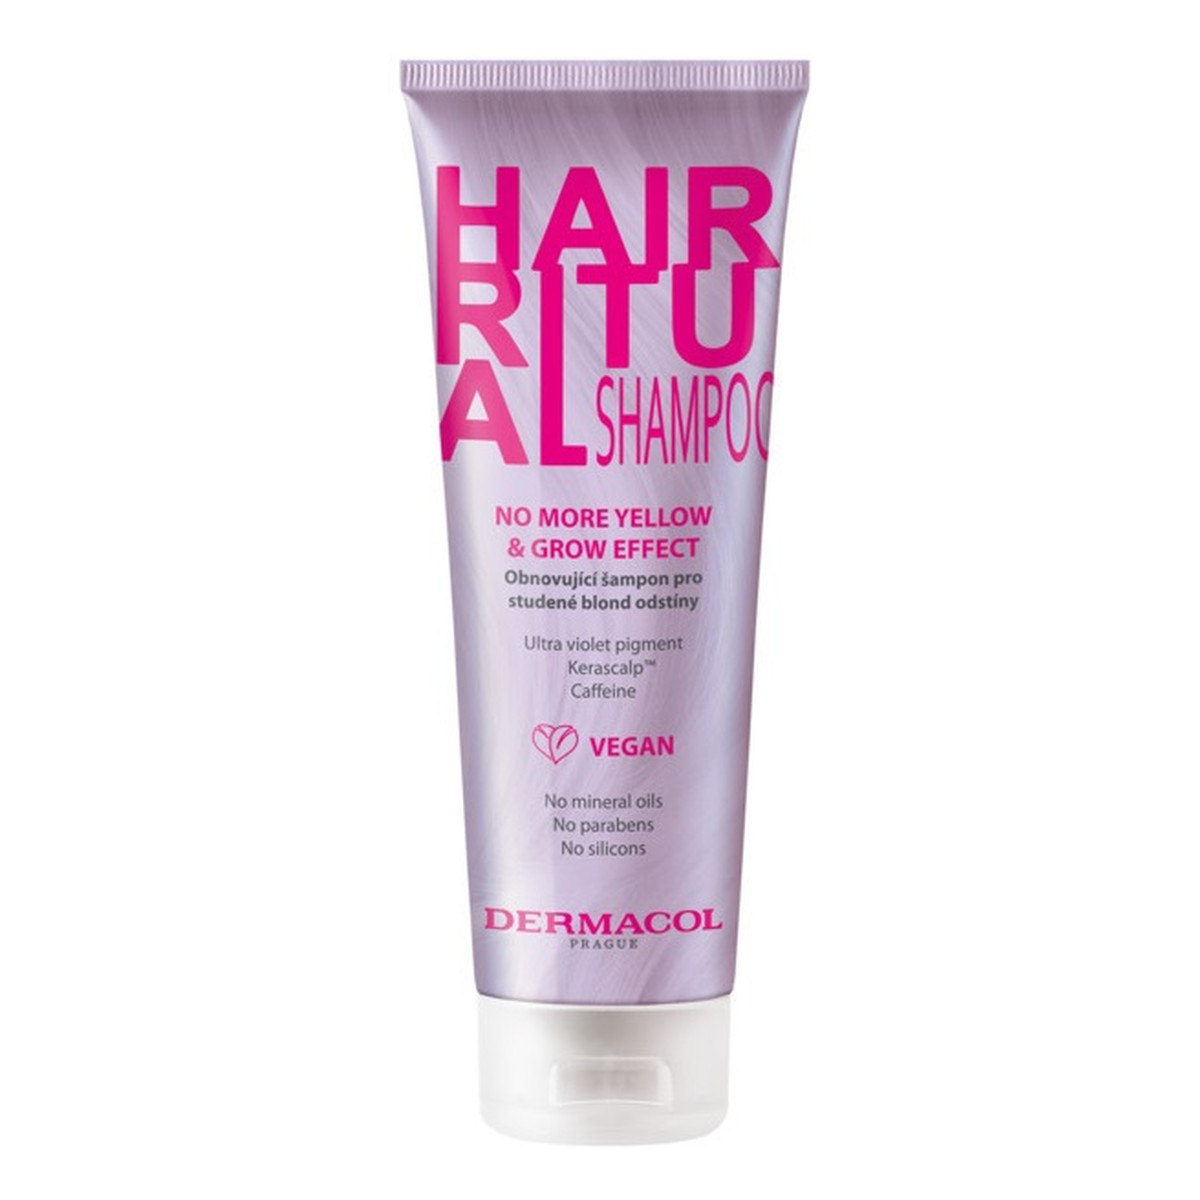 Dermacol Hair ritual shampoo szampon do włosów no more yellow & grow effect 250ml